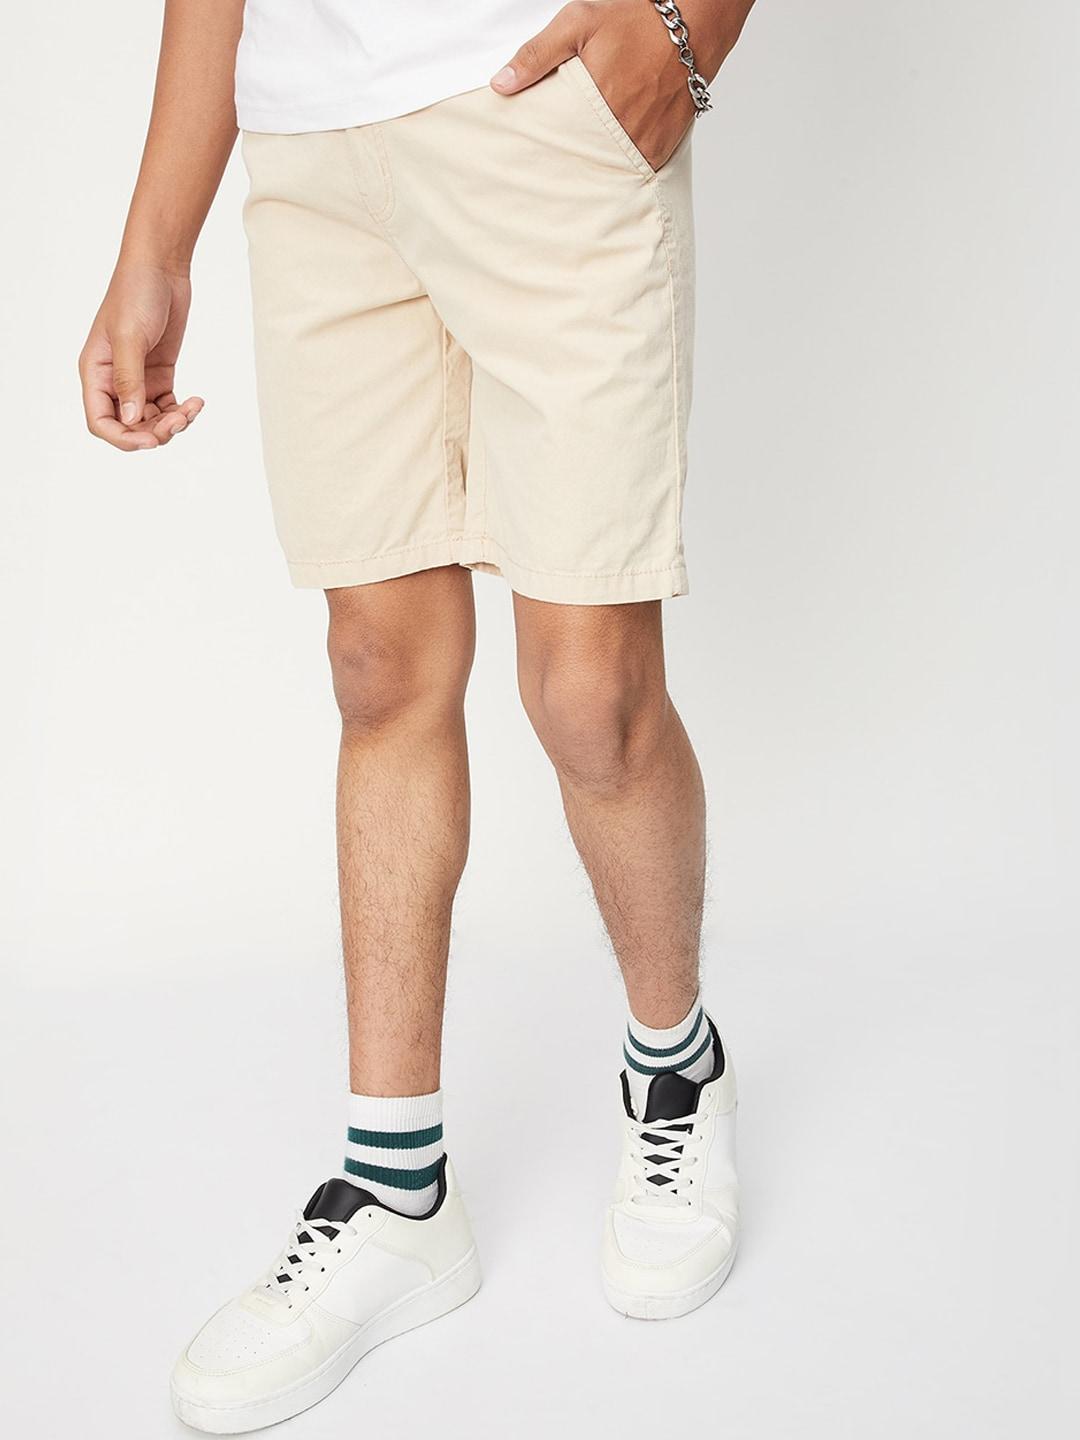 max-boys-pure-cotton-regular-shorts